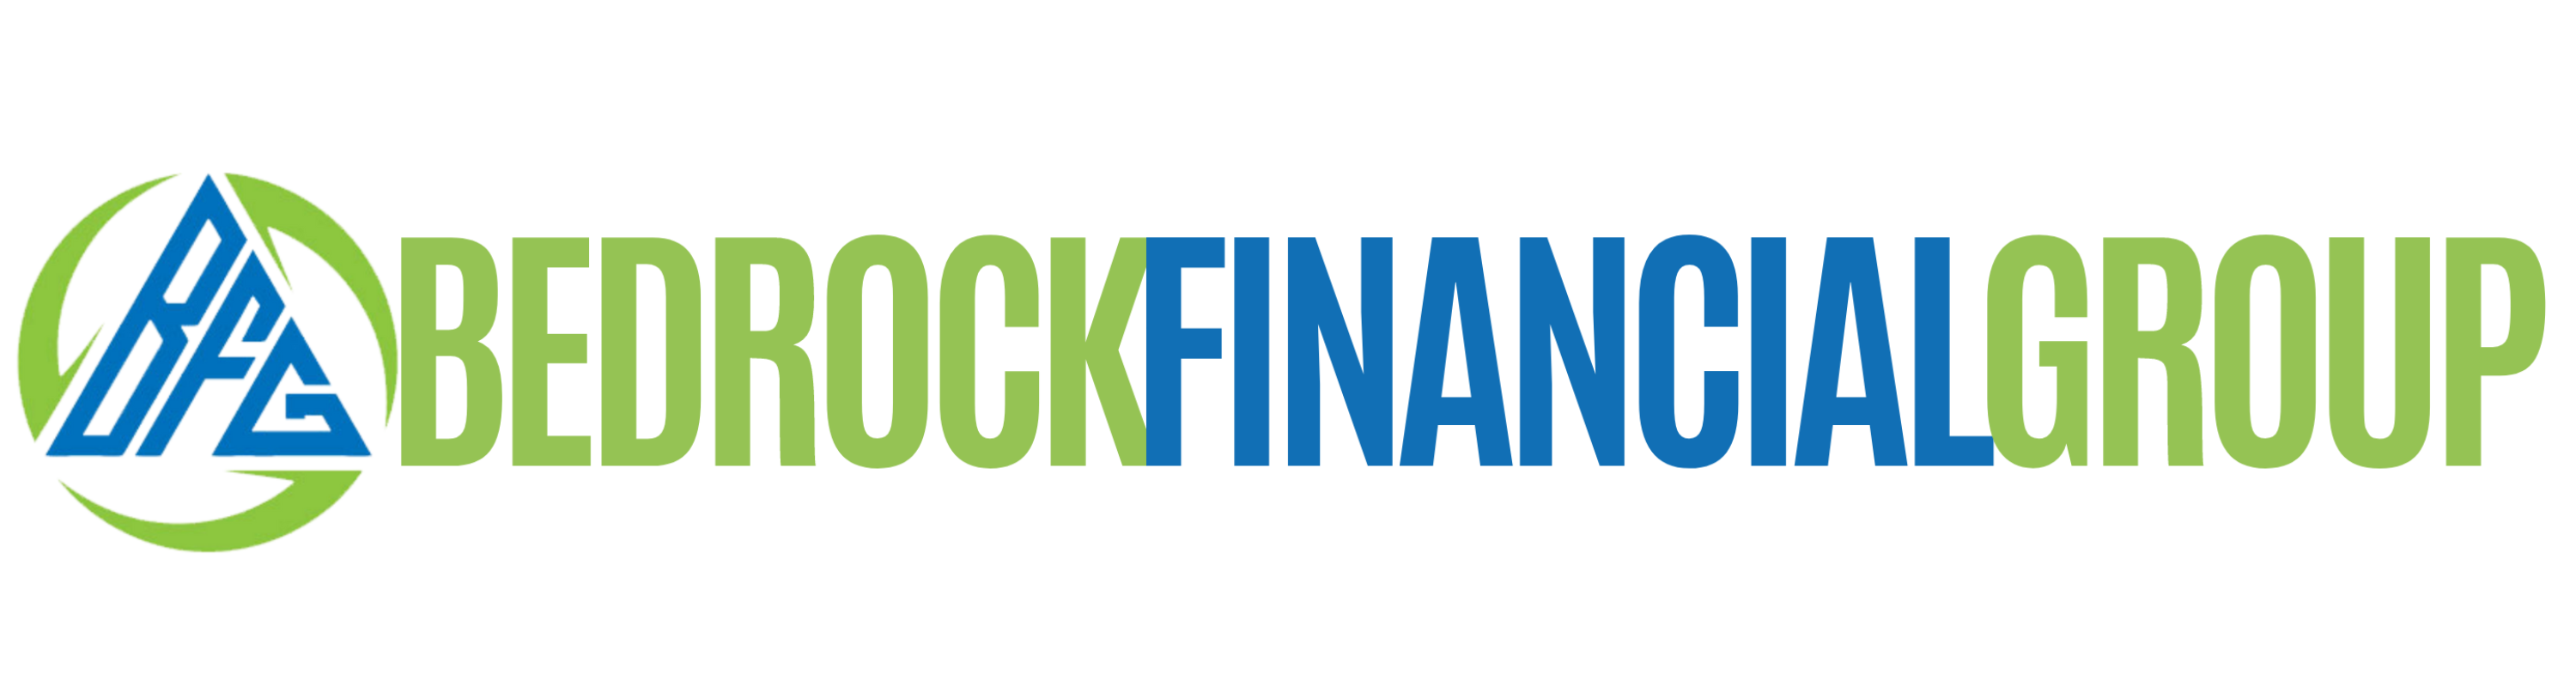 Bedrock Financial Group